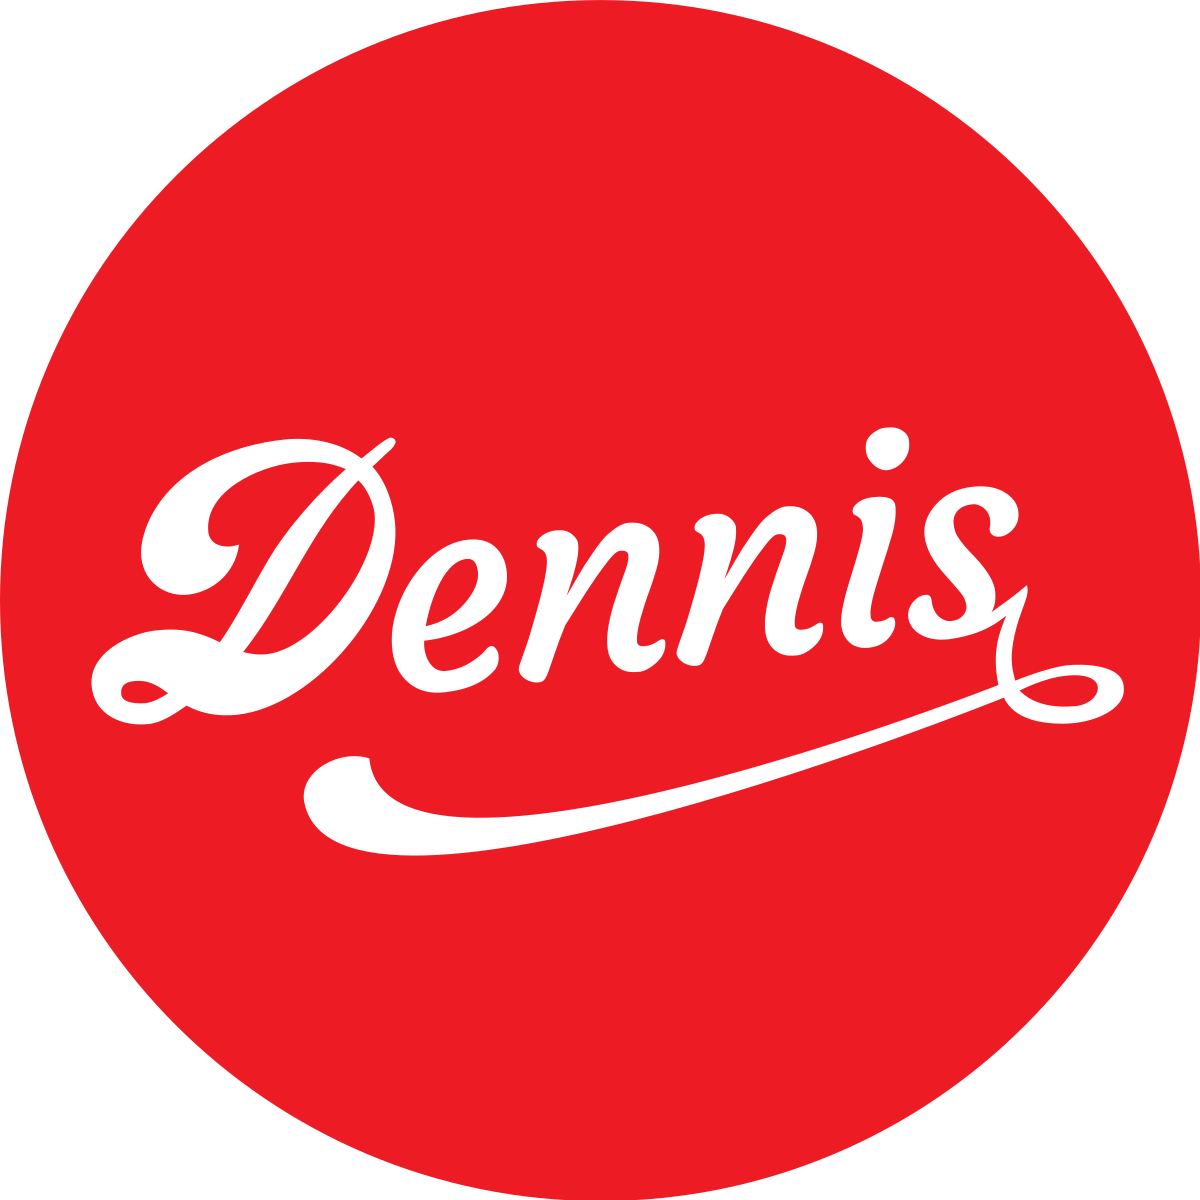 Dennis Publishing - Wikipedia